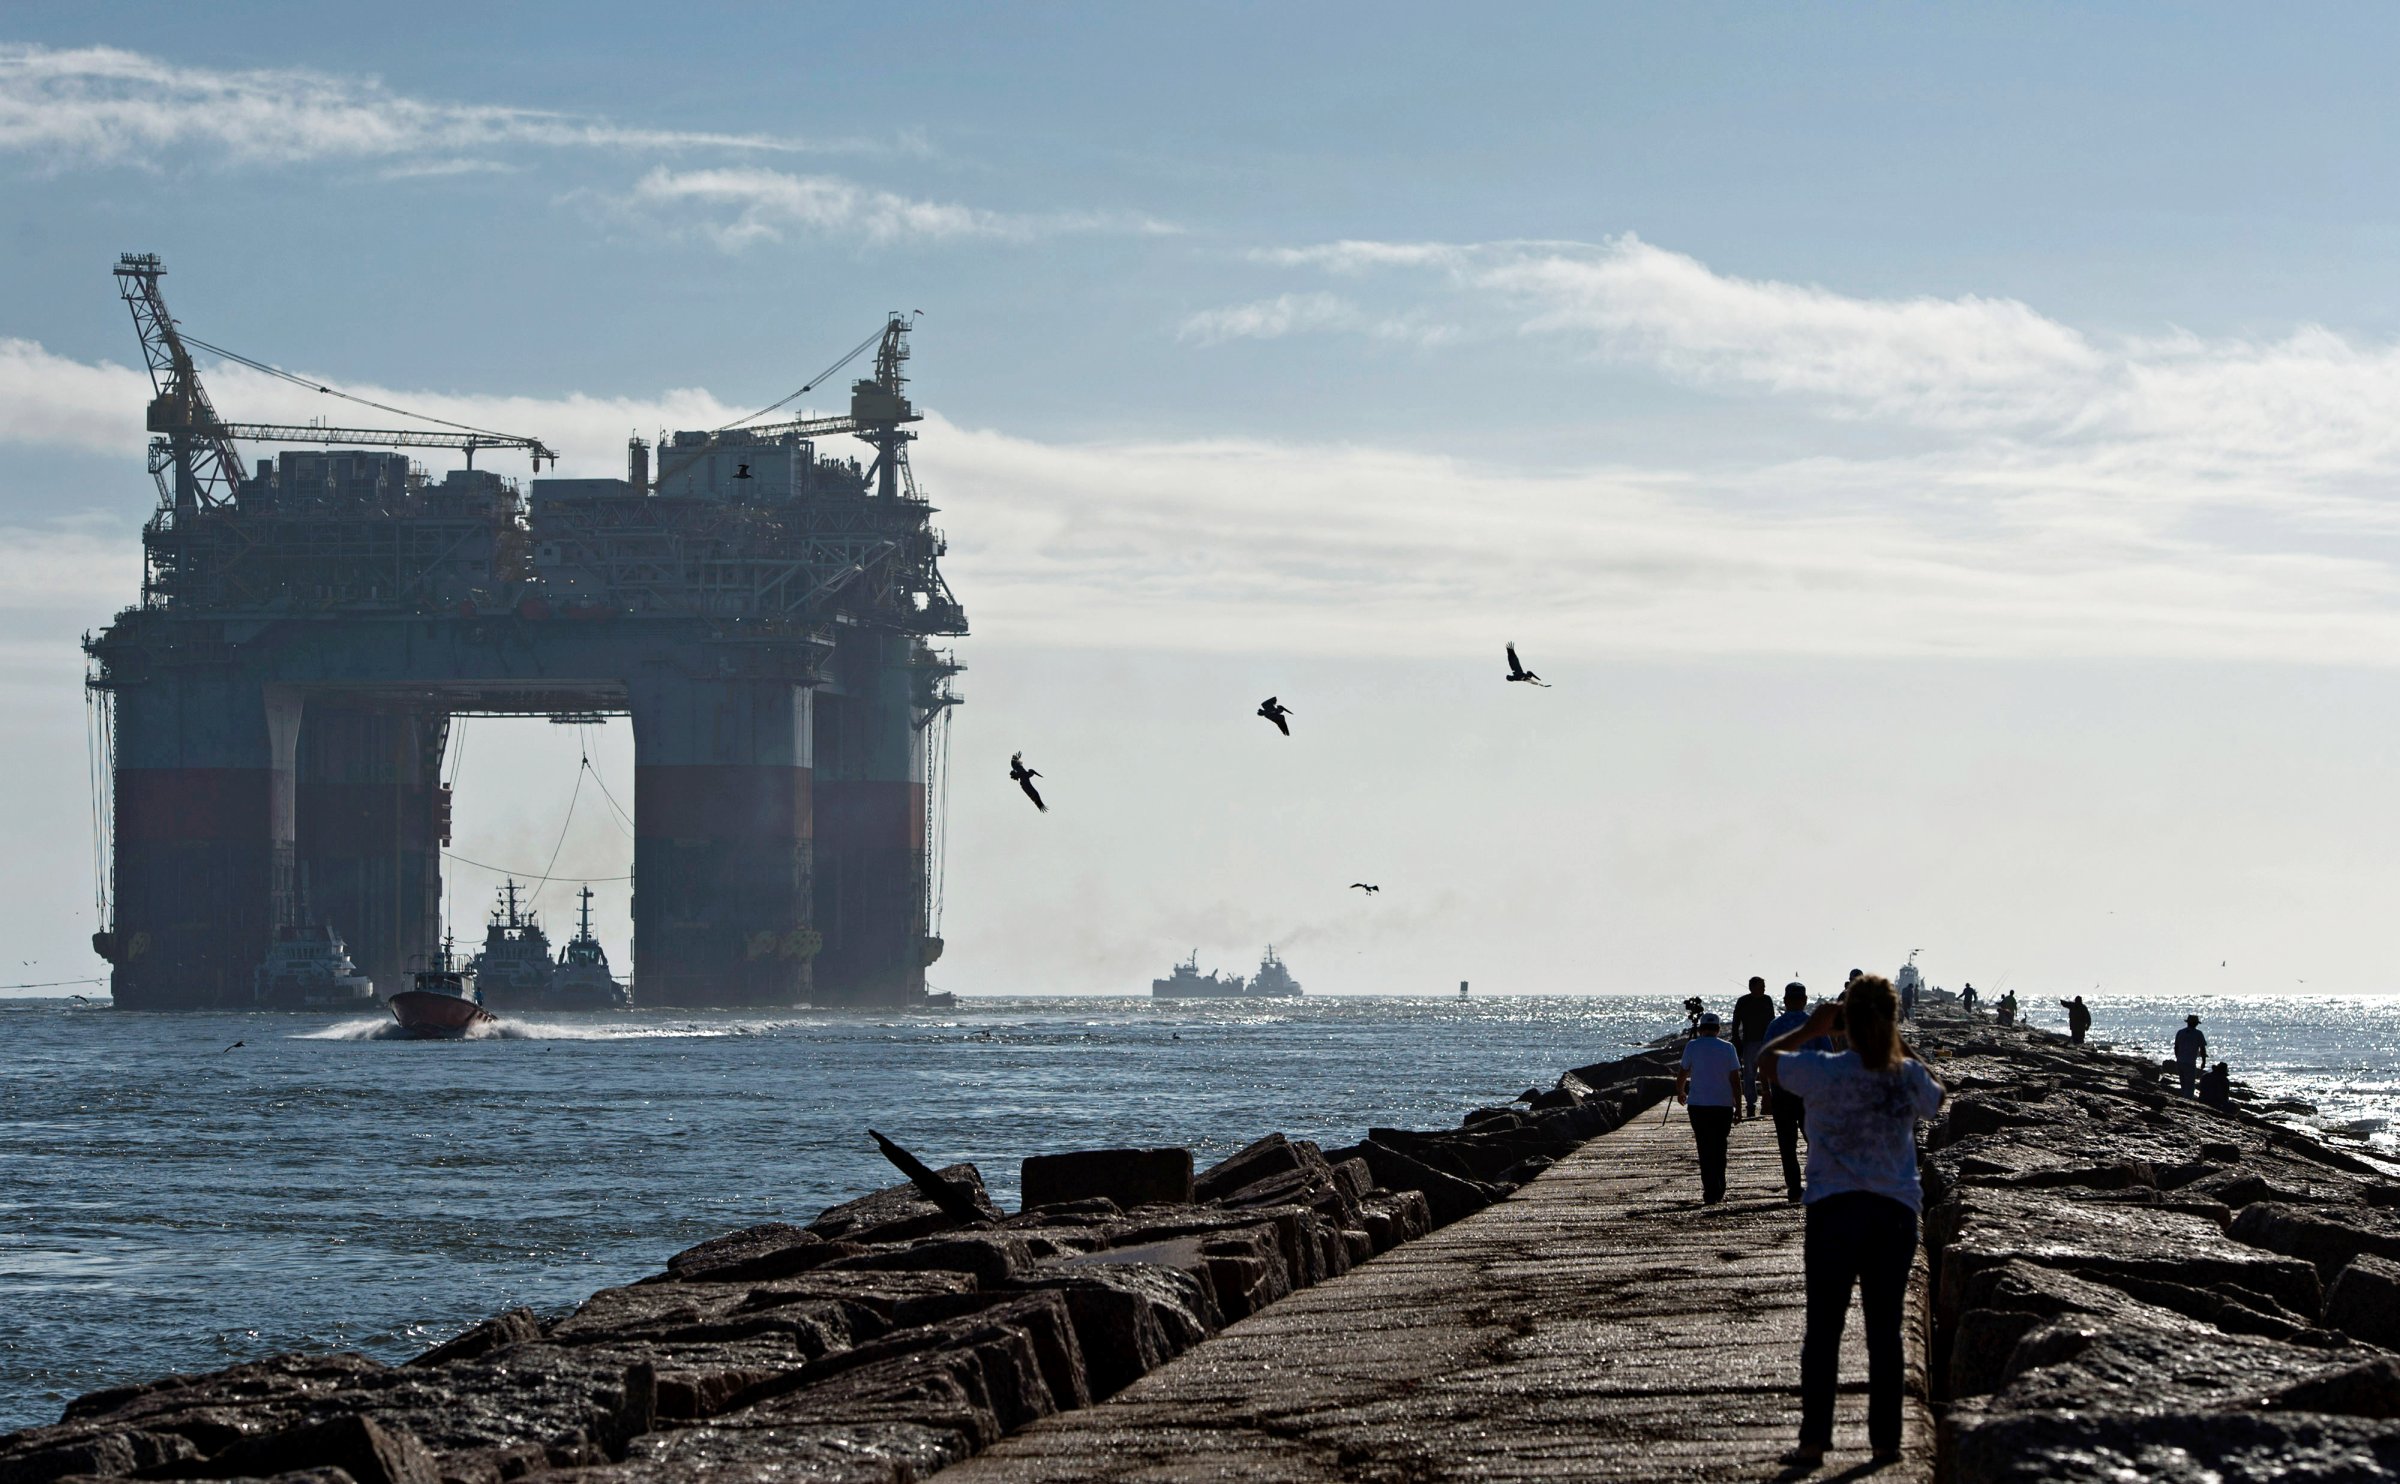 Chevron's Jack/St. Malo Oil Platform Departs From Kiewit Offshore